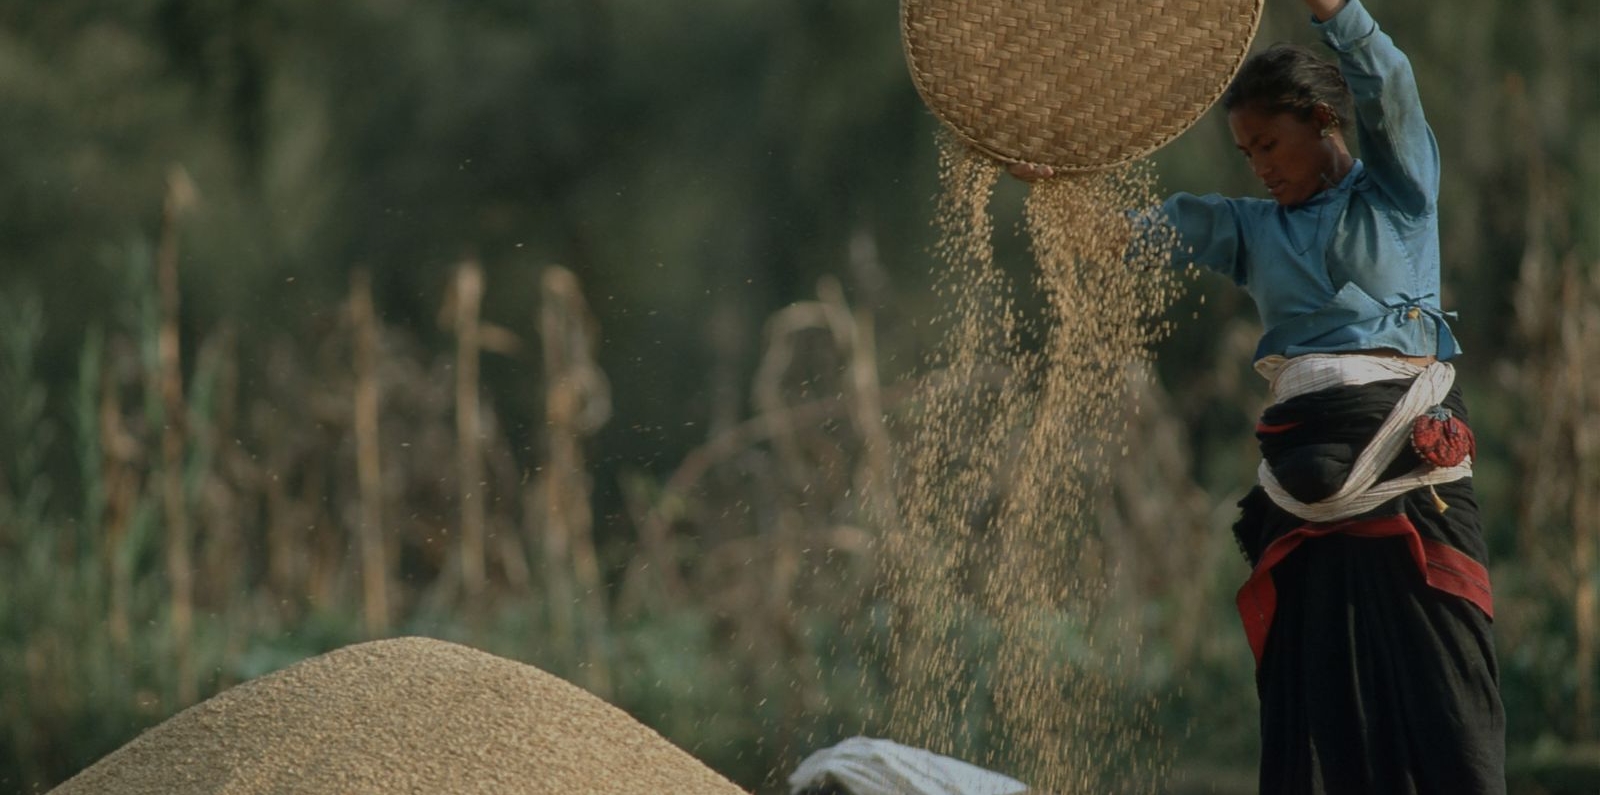 Woman sifting grain in Nepal